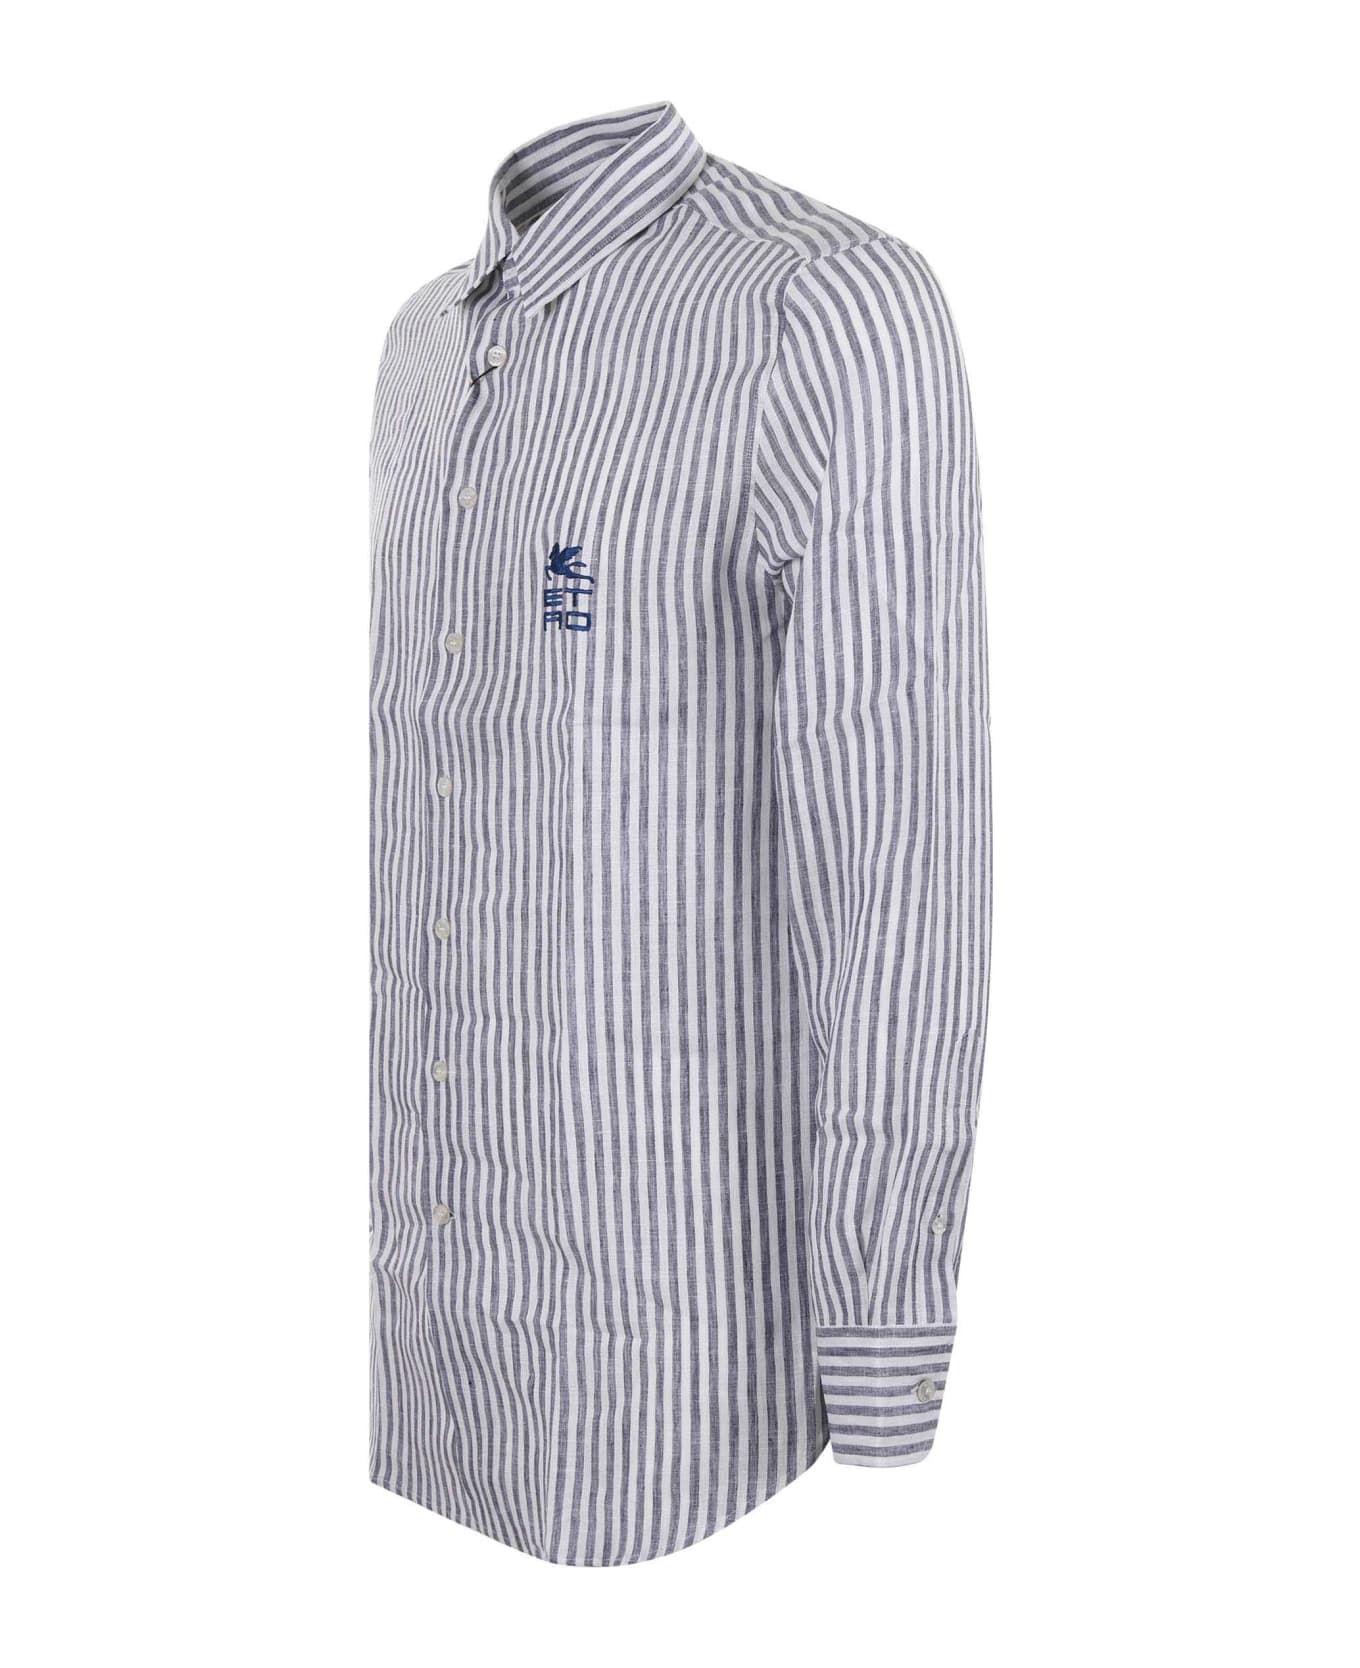 Etro Shirt - Bianco/blu